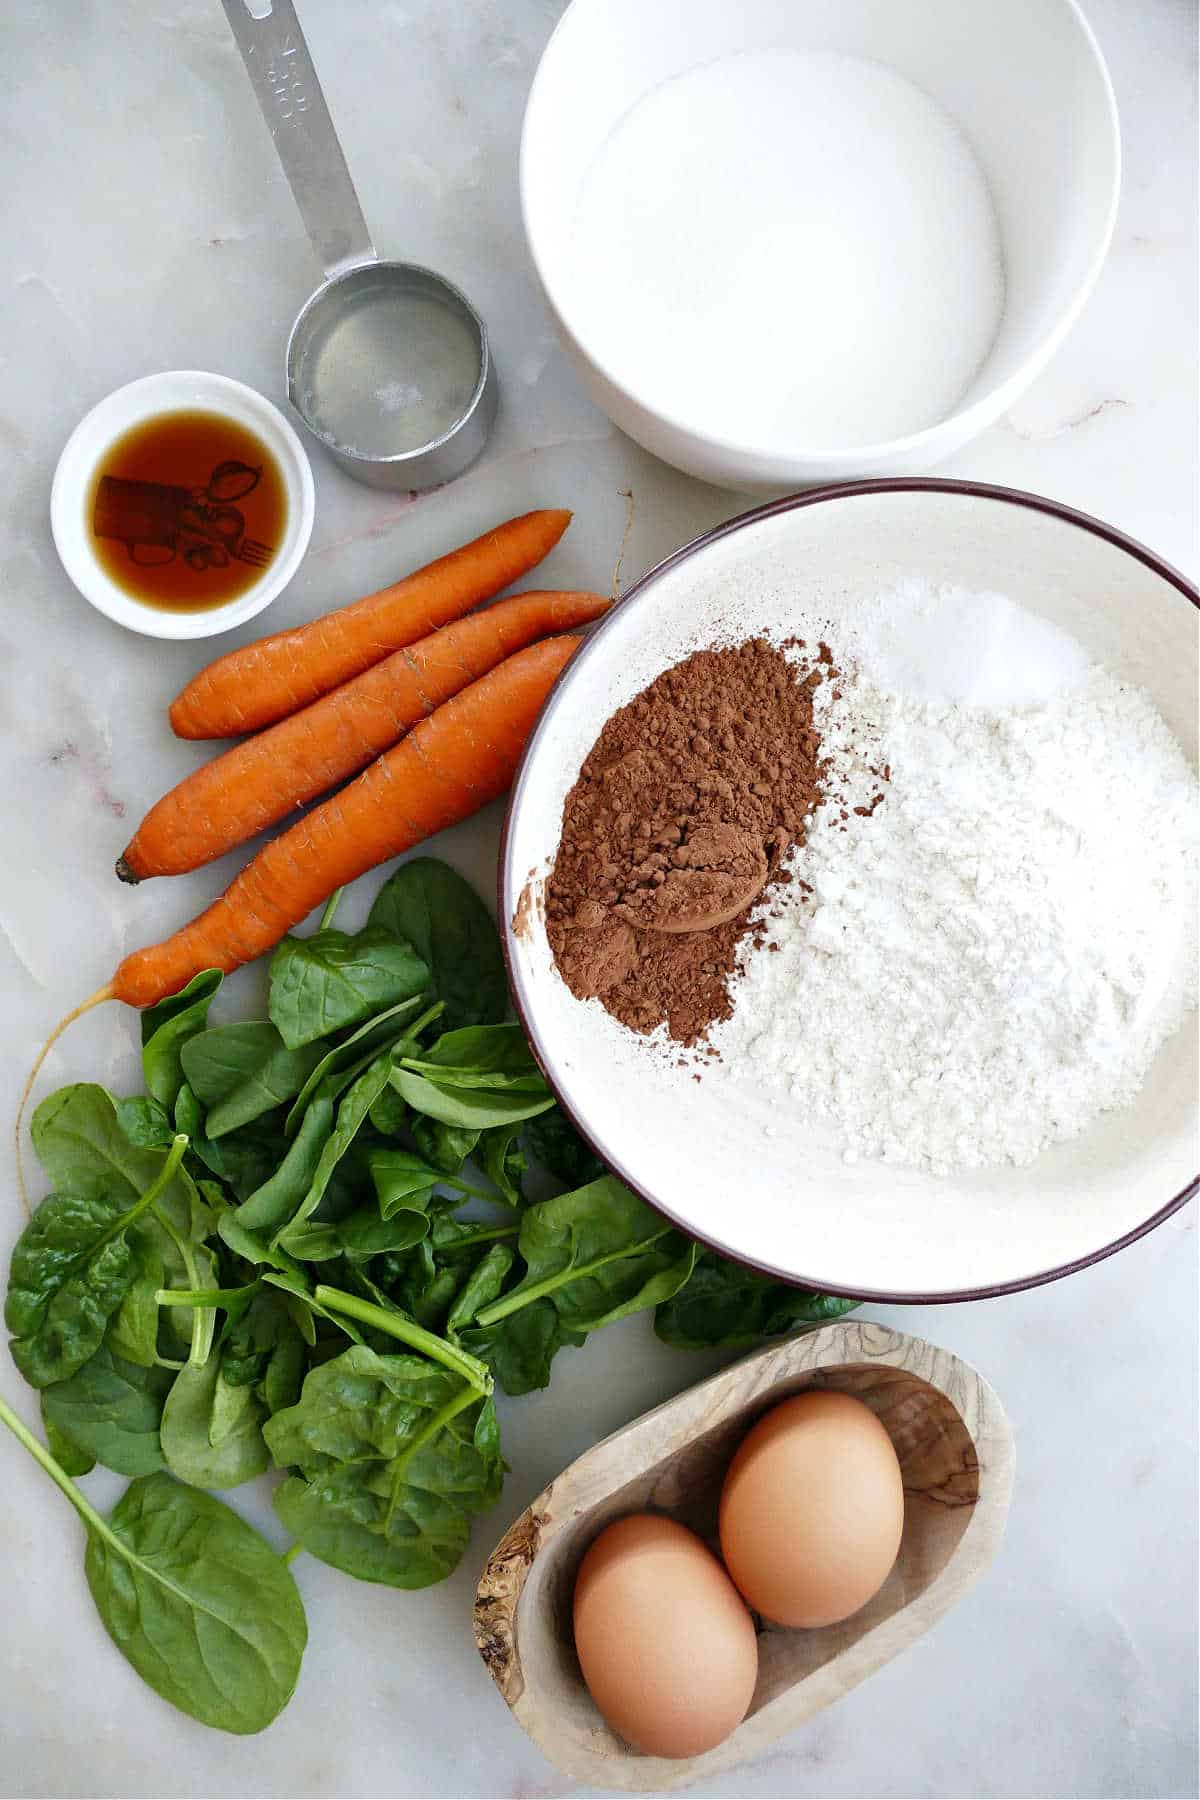 coconut oil, vanilla, sugar, flour, eggs, spinach, and carrots on a counter